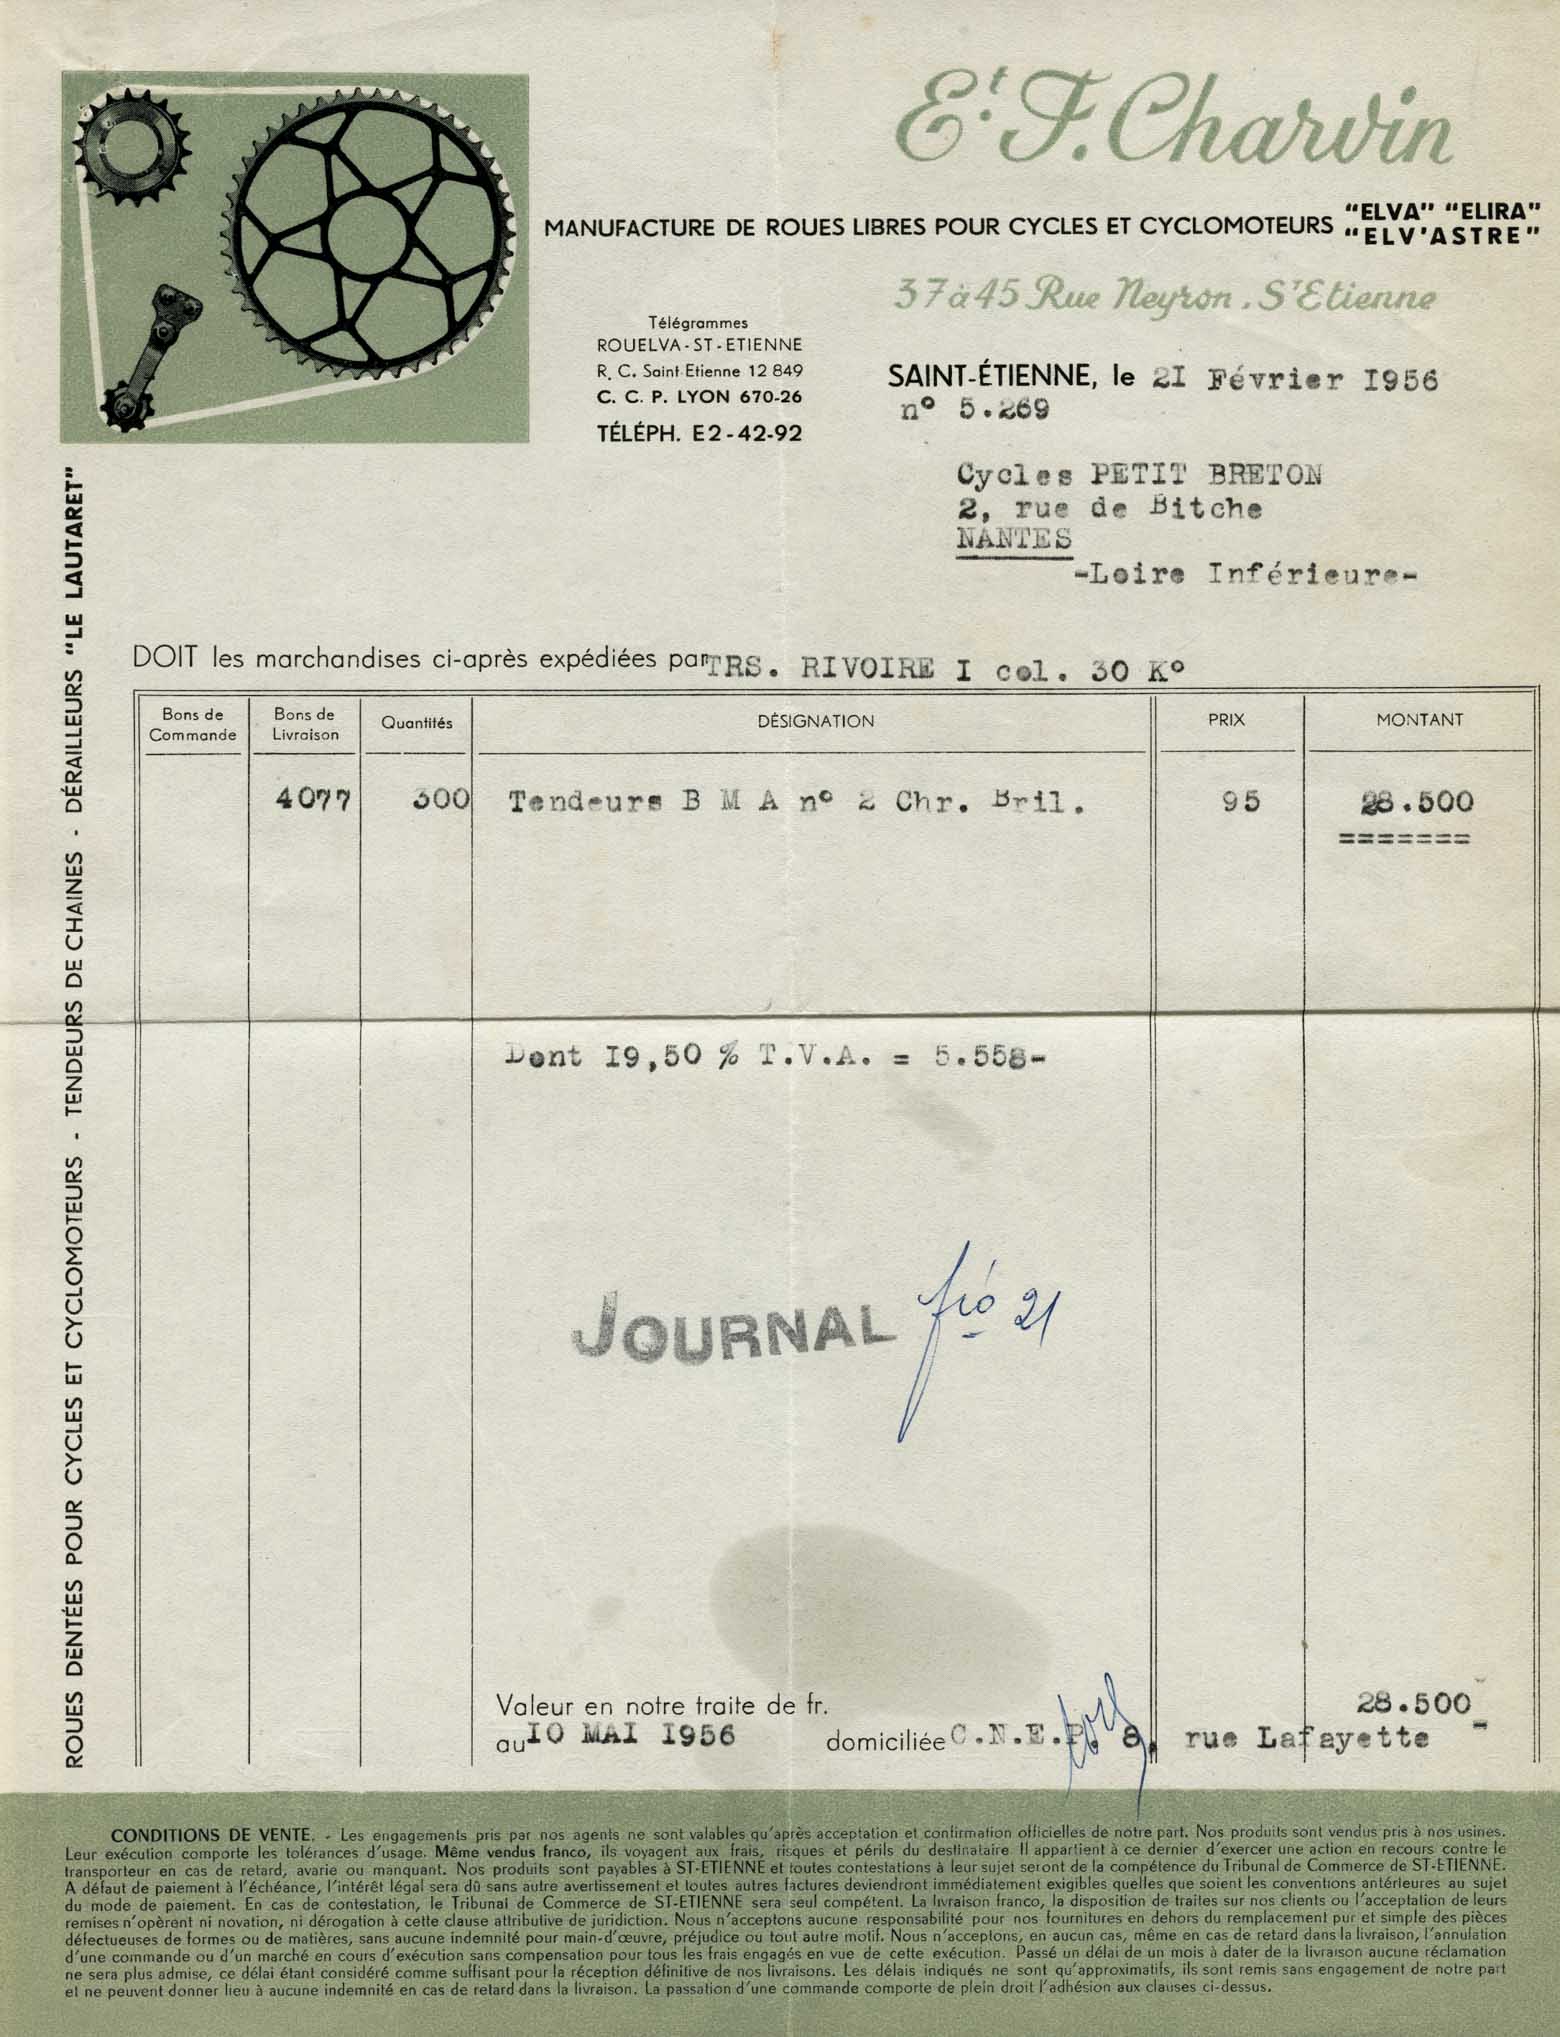 Charvin - invoice 1956 main image